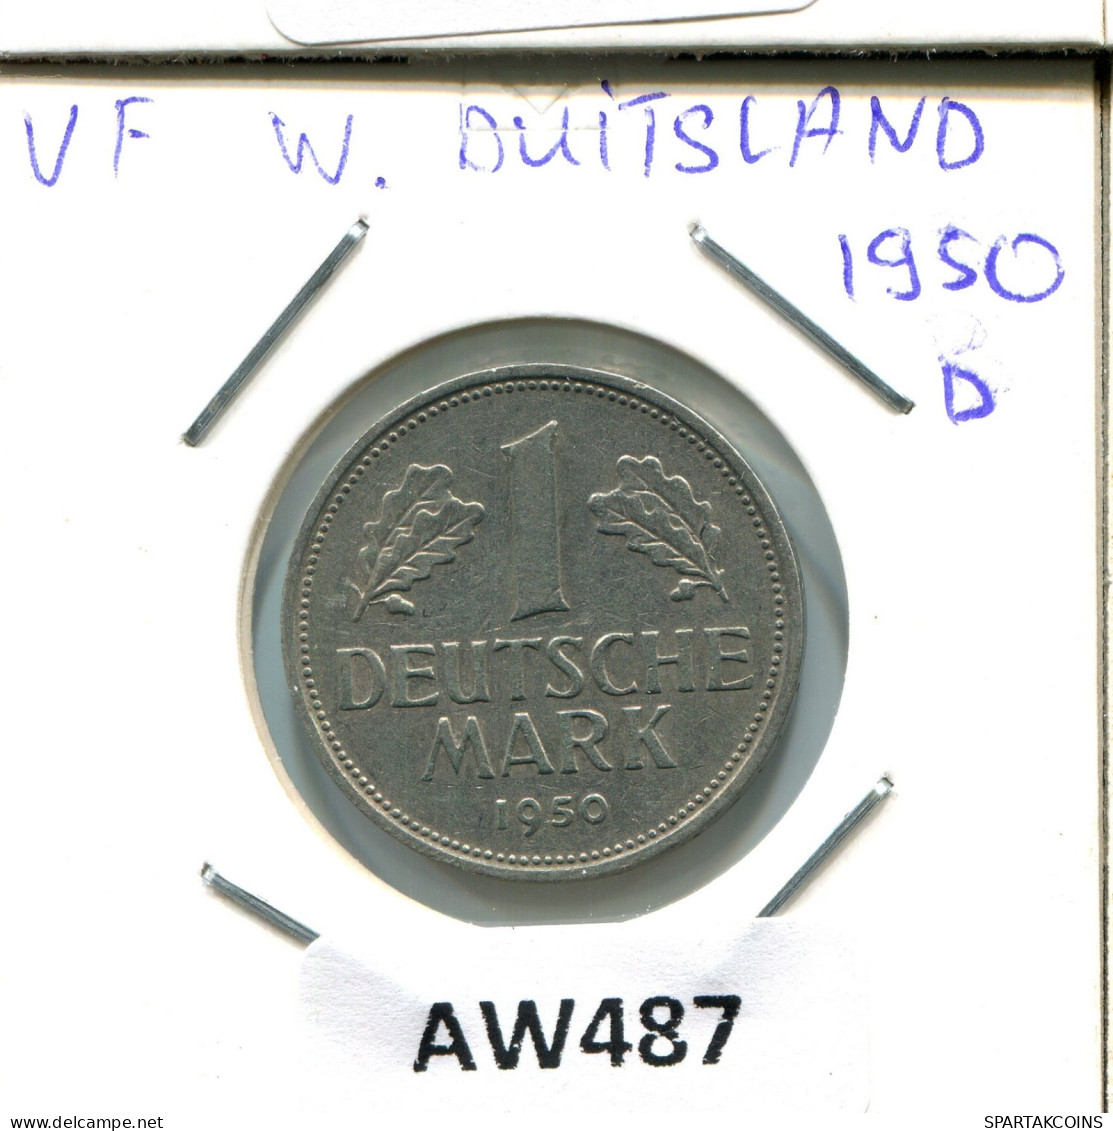 1 DM 1950 D ALLEMAGNE Pièce GERMANY #AW487.F.A - 1 Mark